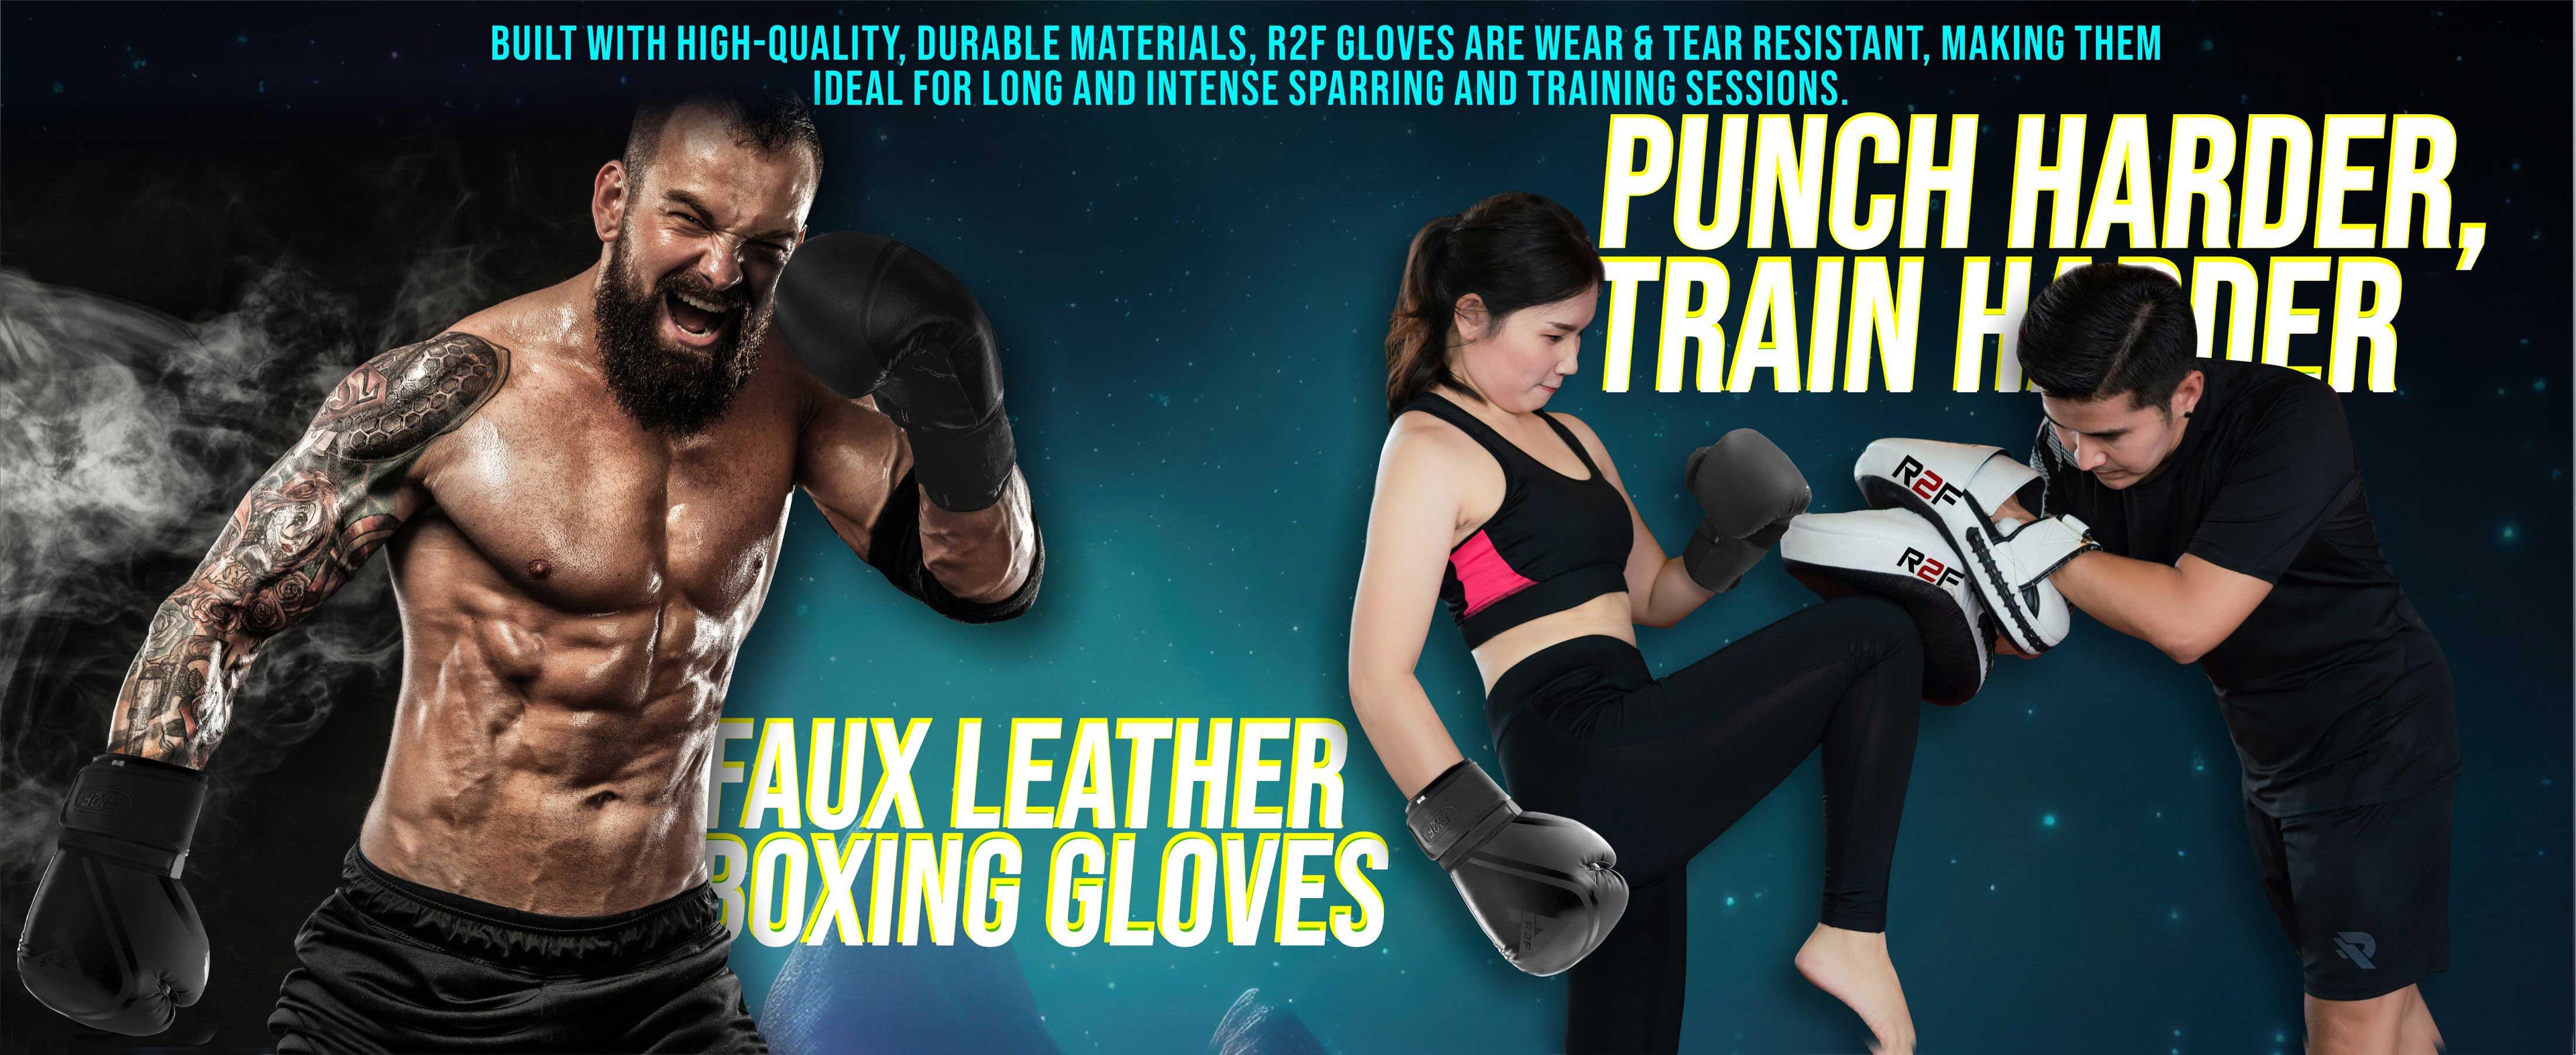 R2F Boxing Gloves, Pro Training Sparring, Leather, Muay Thai MMA Kickboxing, Punching Bag Gloves Focus Pad Mitts, Men Women Adult 10oz, 12oz, 14oz, 16oz